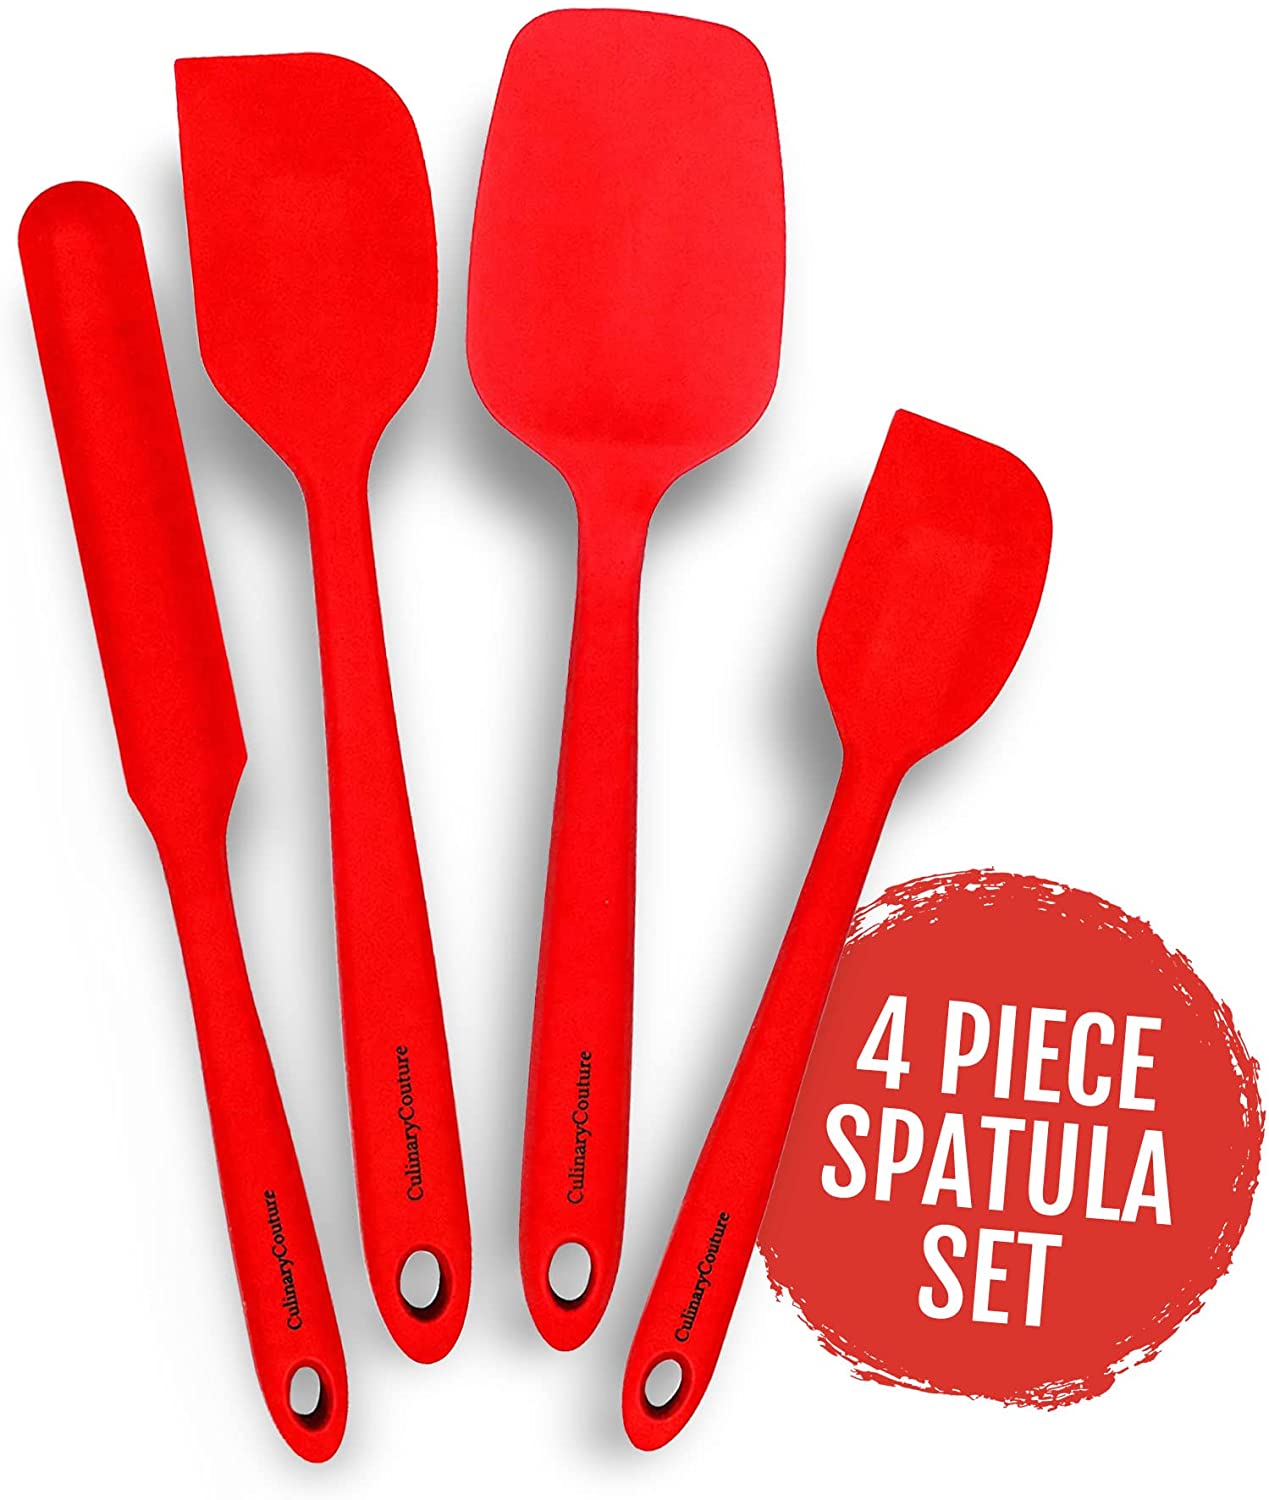 4 Piece Spatula Set